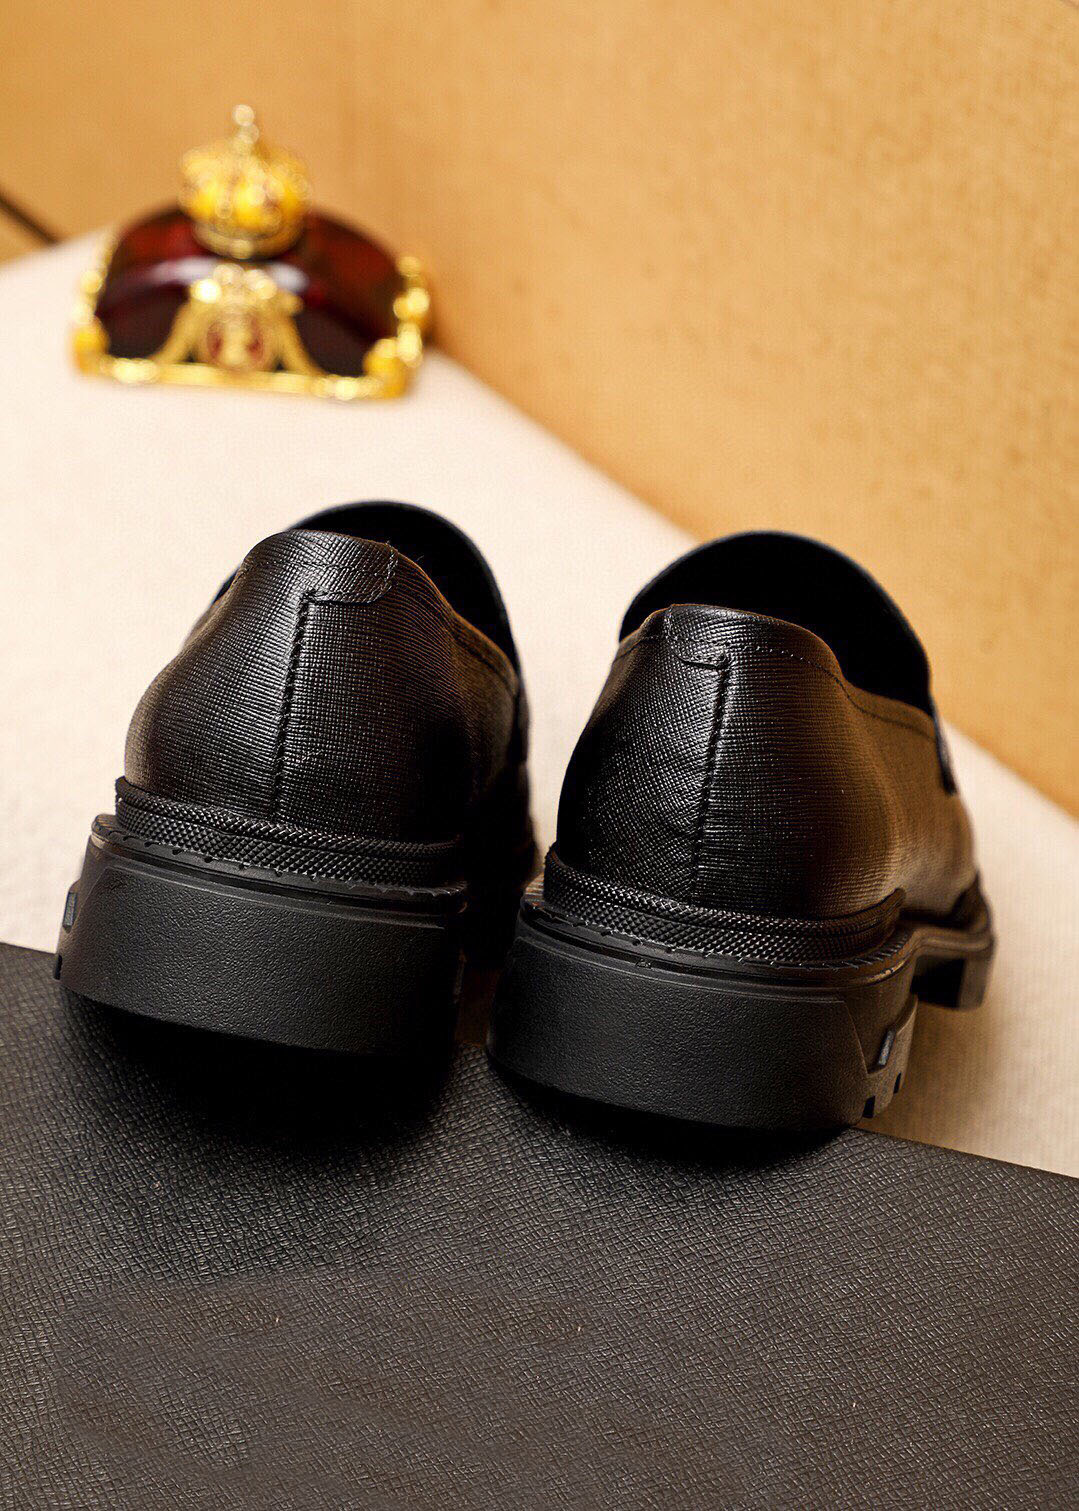 2023 Mens 드레스 신발 패션 통기성 통기 가죽 플랫폼 디자이너 캐주얼 로퍼 모사 신 웨딩 파티 옥스포드 신발 크기 38-45